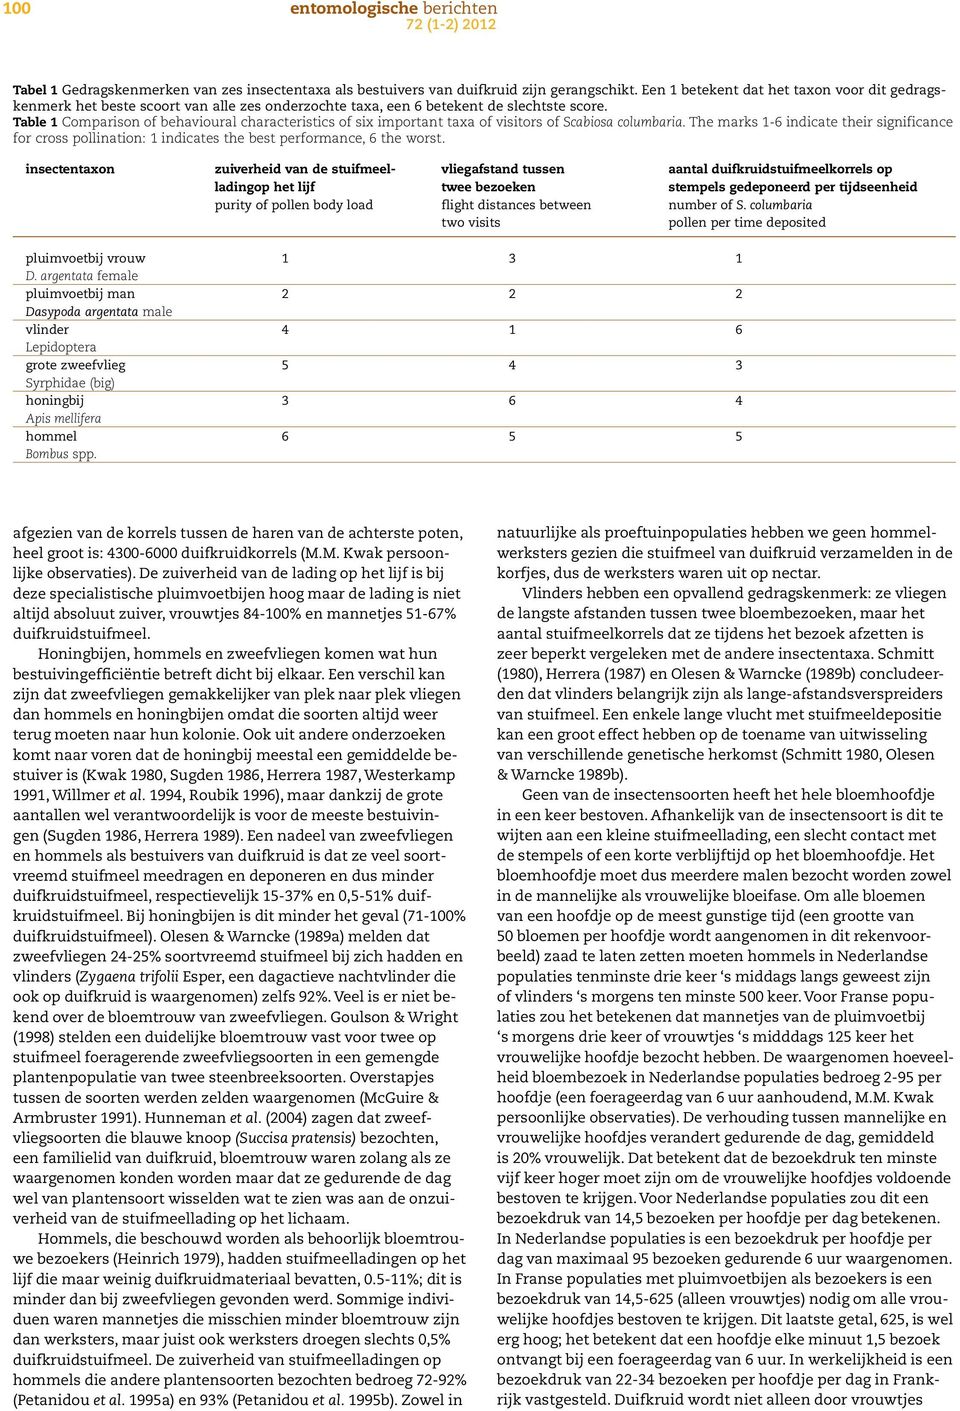 Table 1 Comparison of behavioural characteristics of six important taxa of visitors of Scabiosa columbaria.